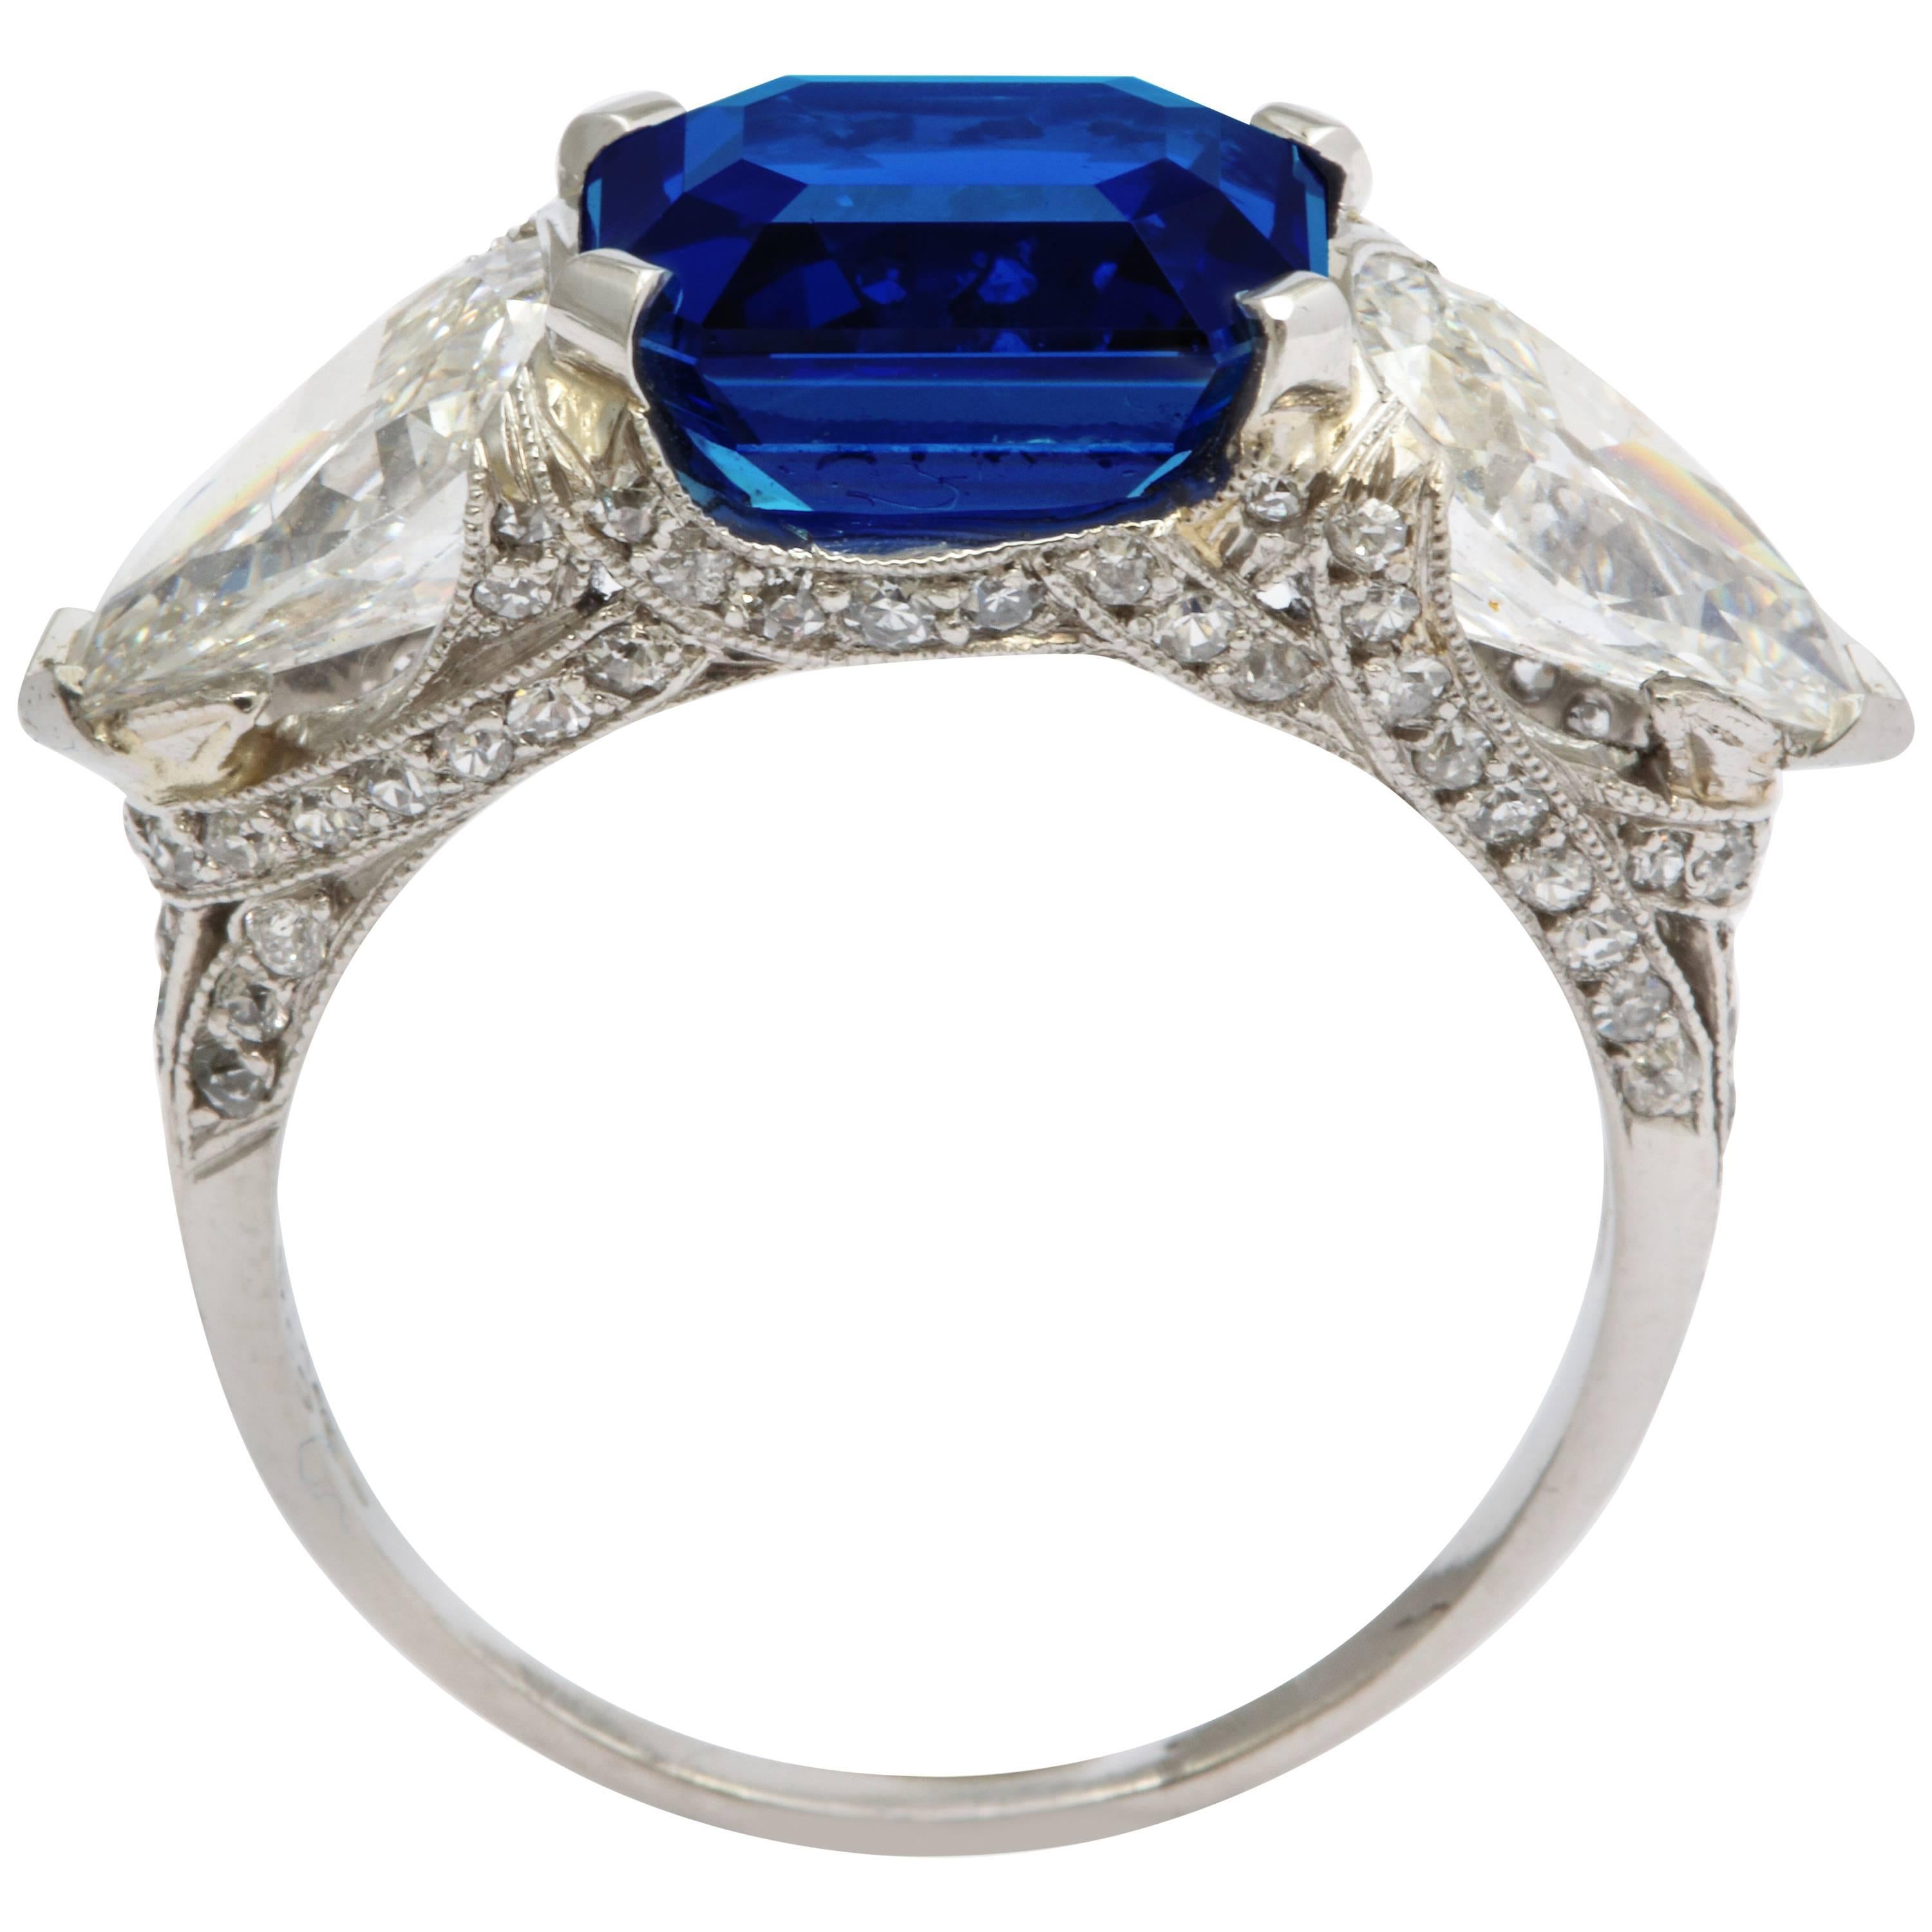 Tiffany & Co. Gubelin Certified 4.65 Carat Royal Blue Burmese Sapphire Ring